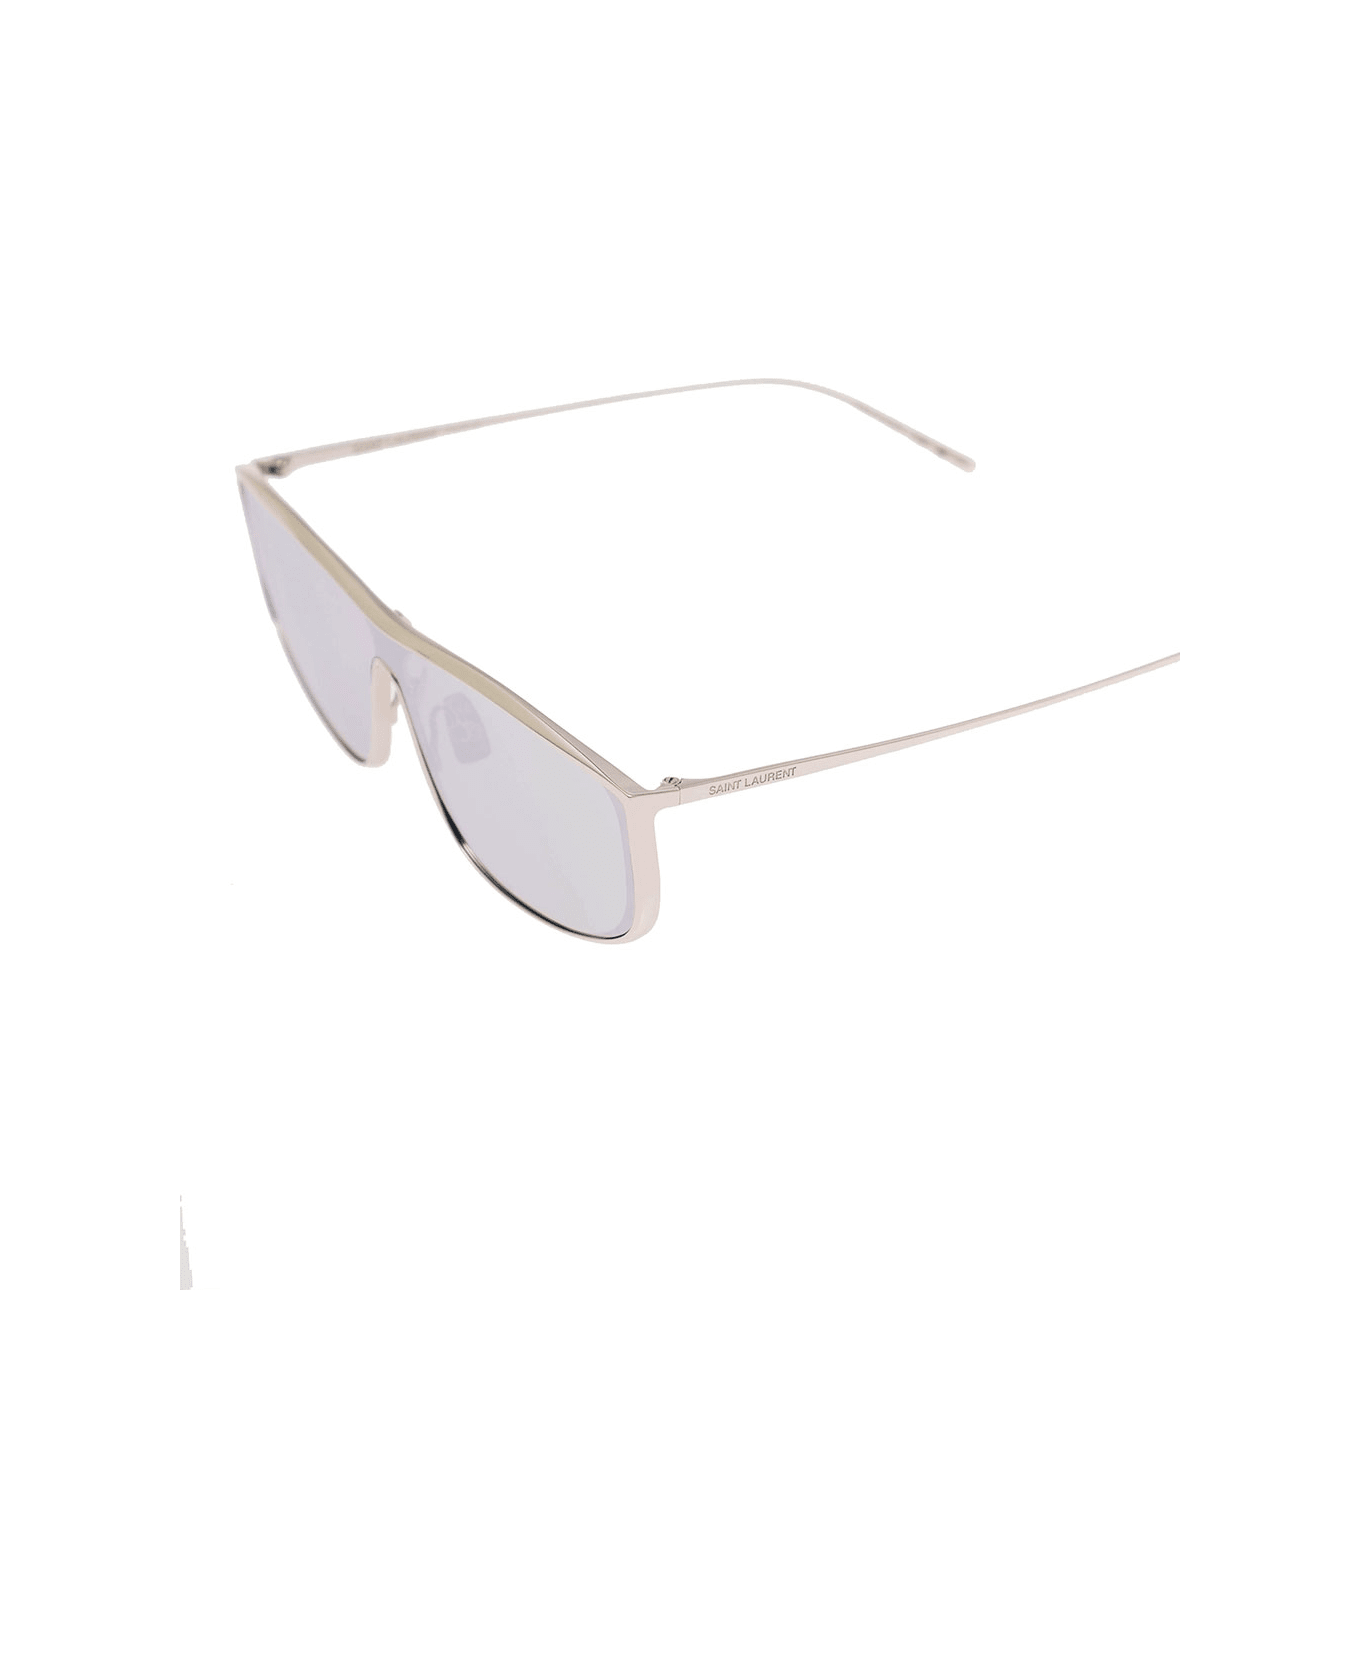 Saint Laurent Sl 605 Luna Sunglasses In Silver-tone Acetate Woman - Metallic